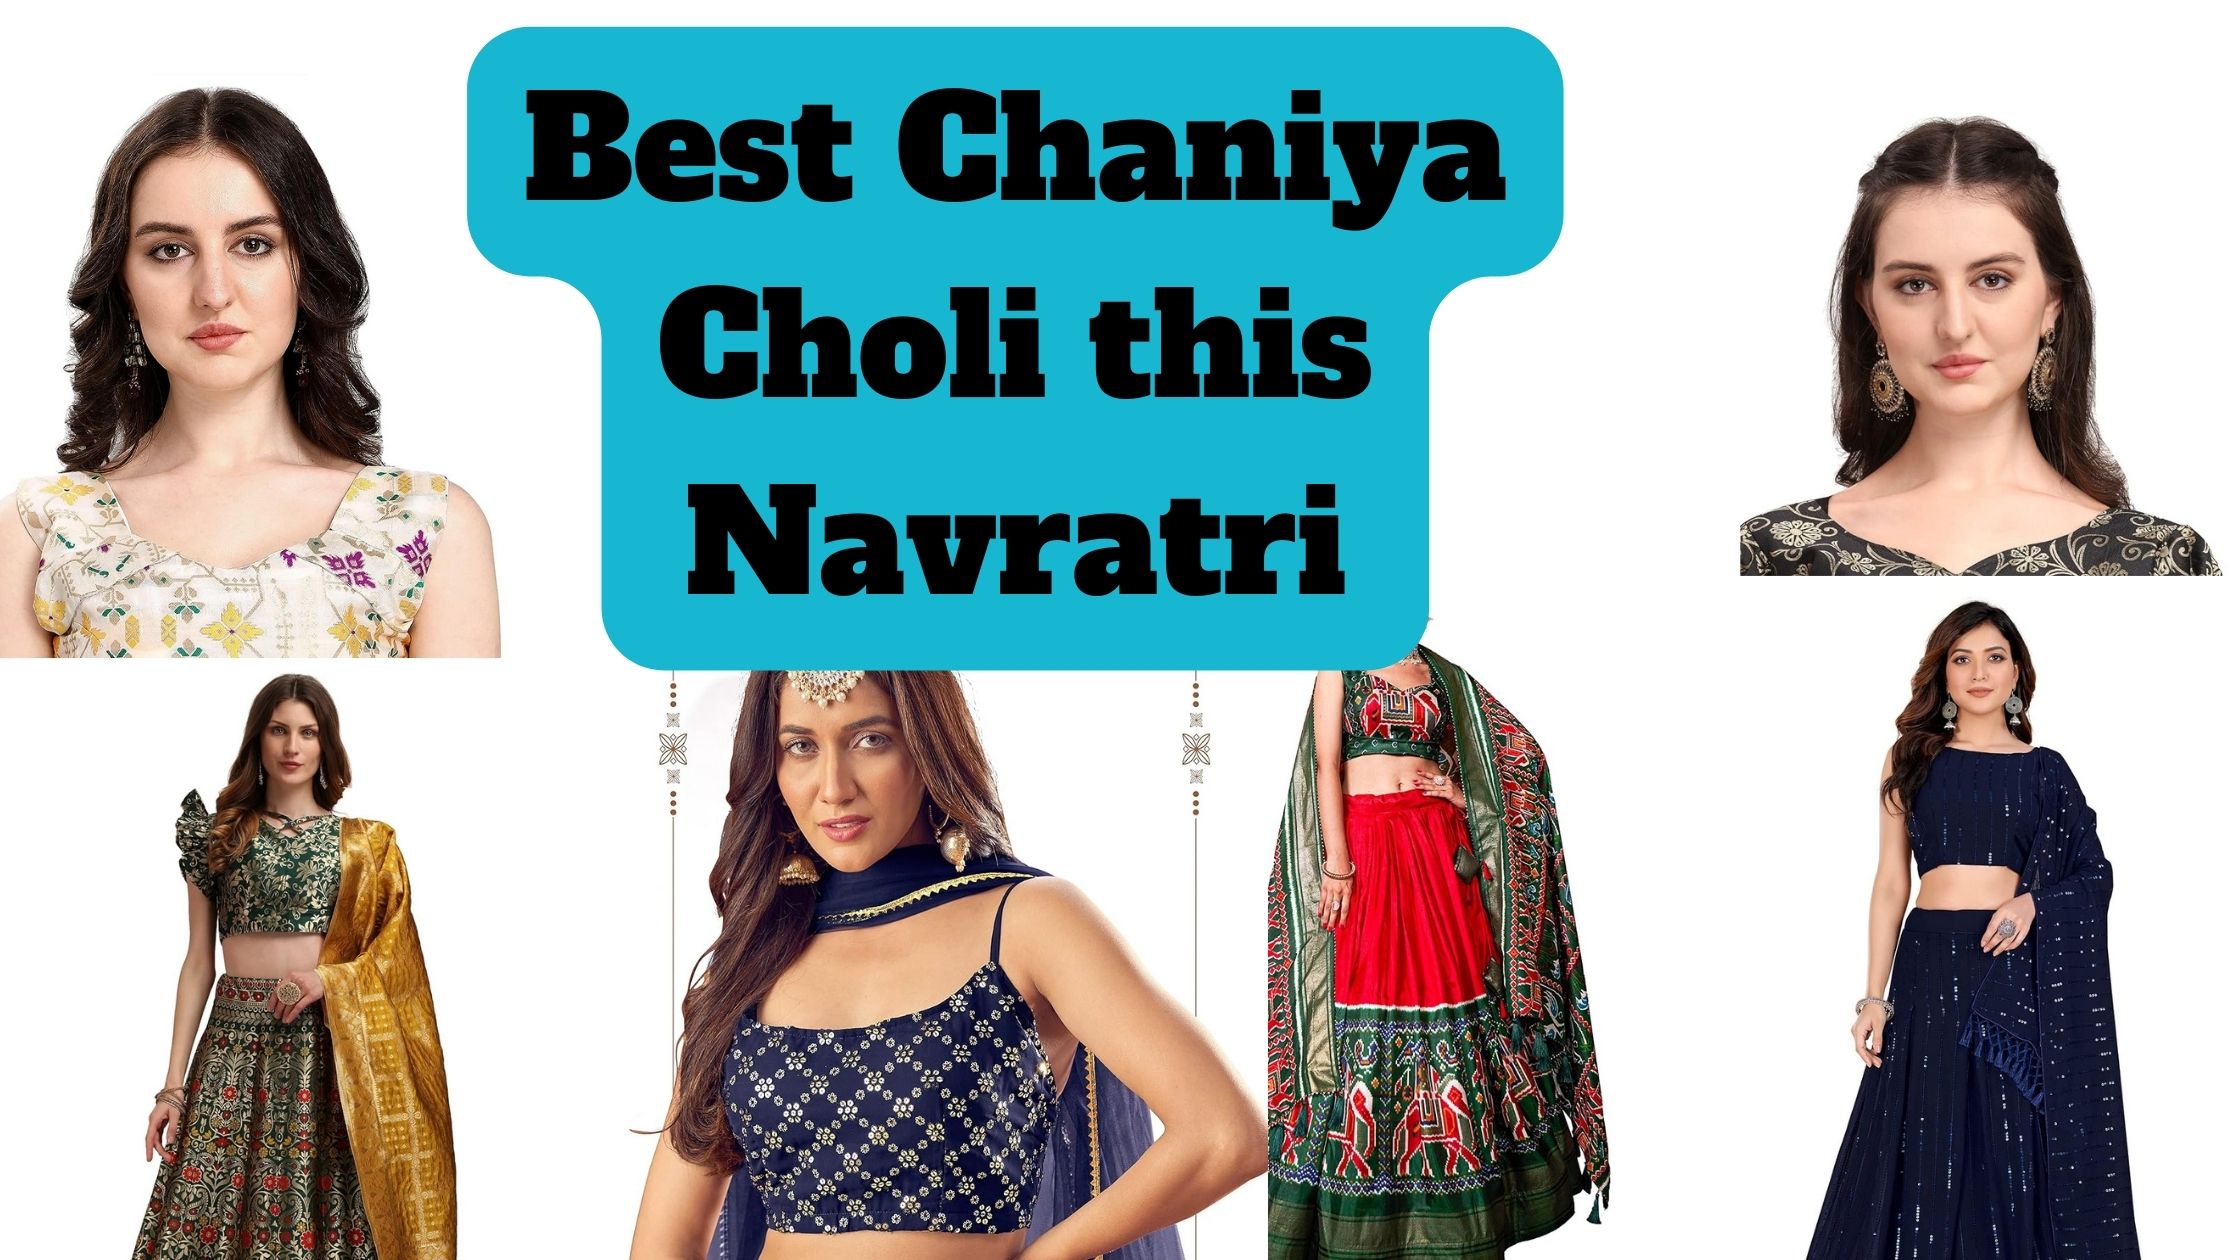 Best Chaniya Choli this Navratri